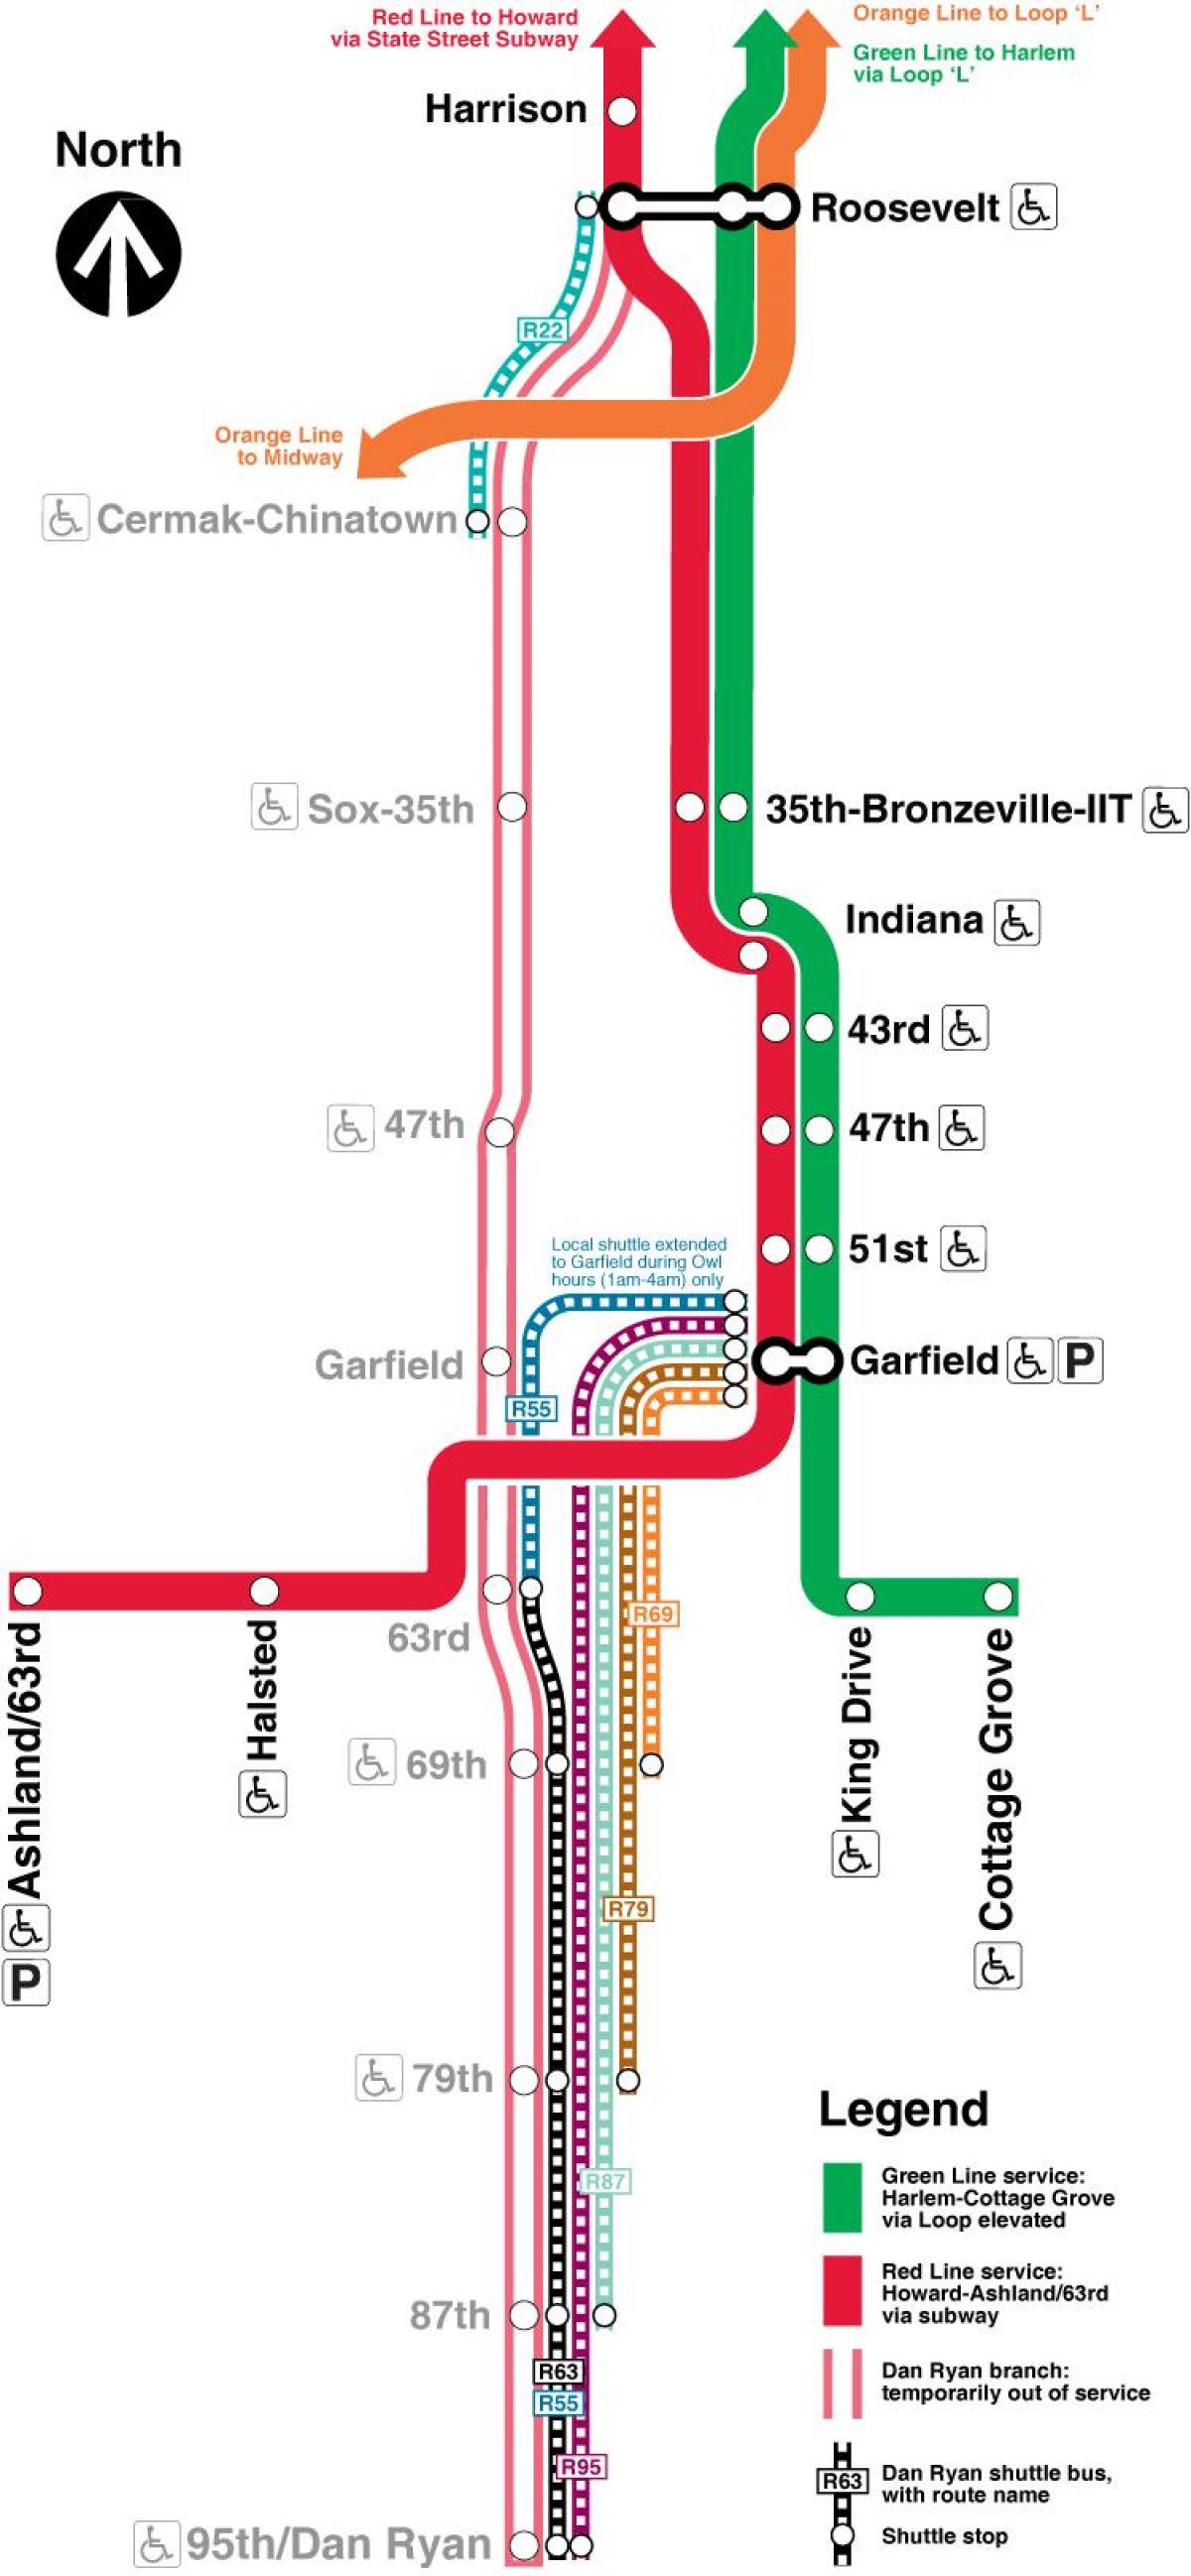 Chicago peta kereta bawah tanah red line